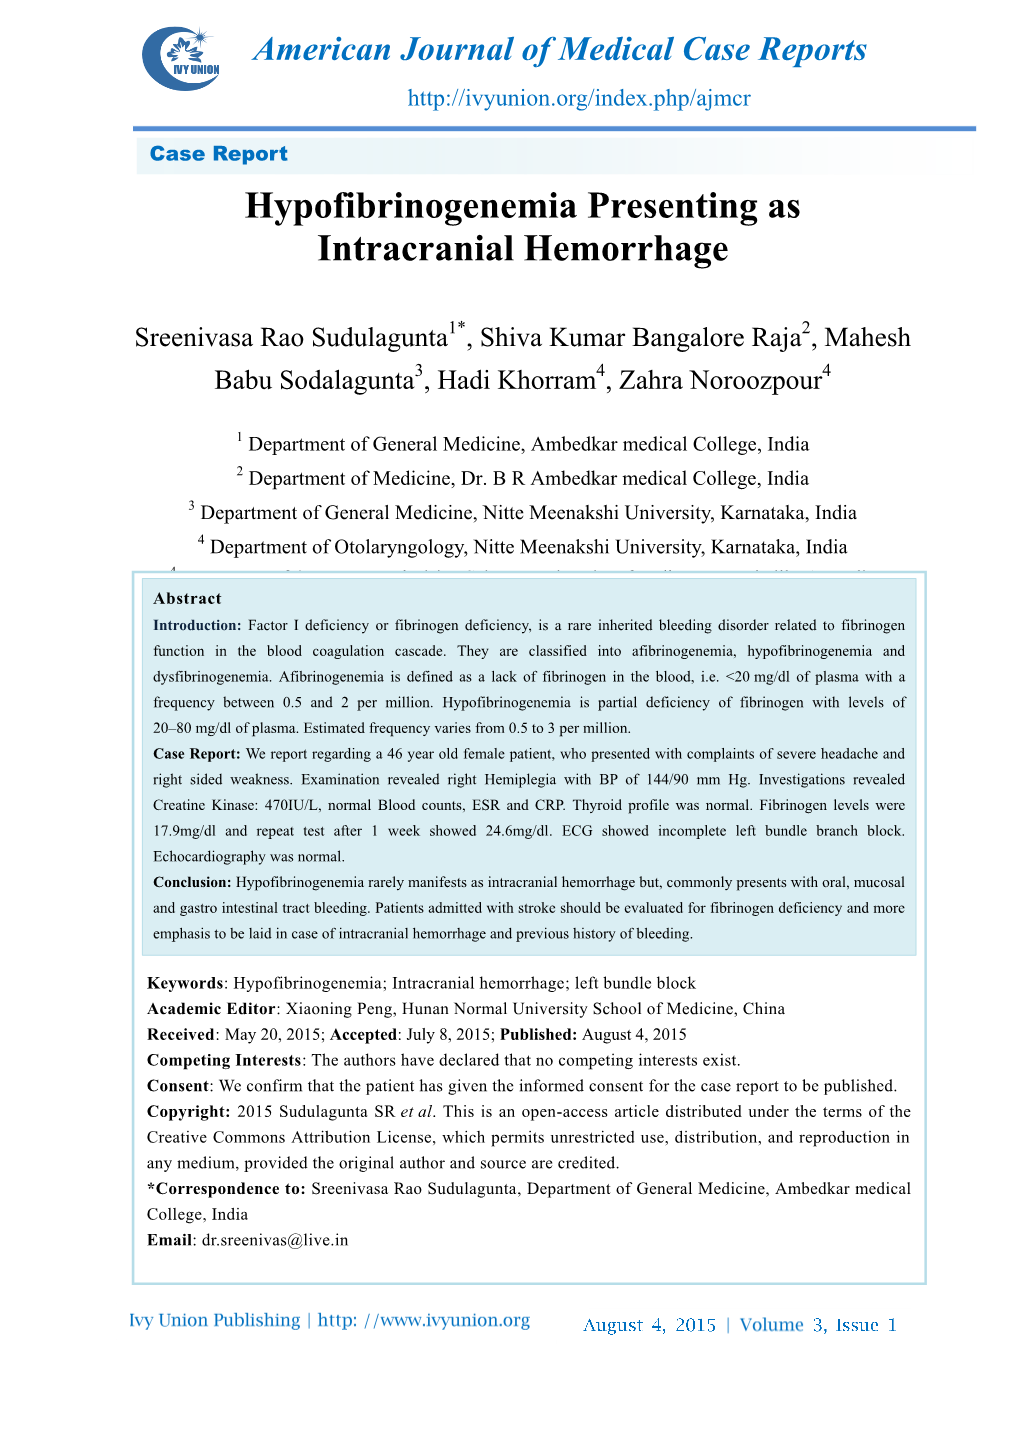 Hypofibrinogenemia Presenting As Intracranial Hemorrhage